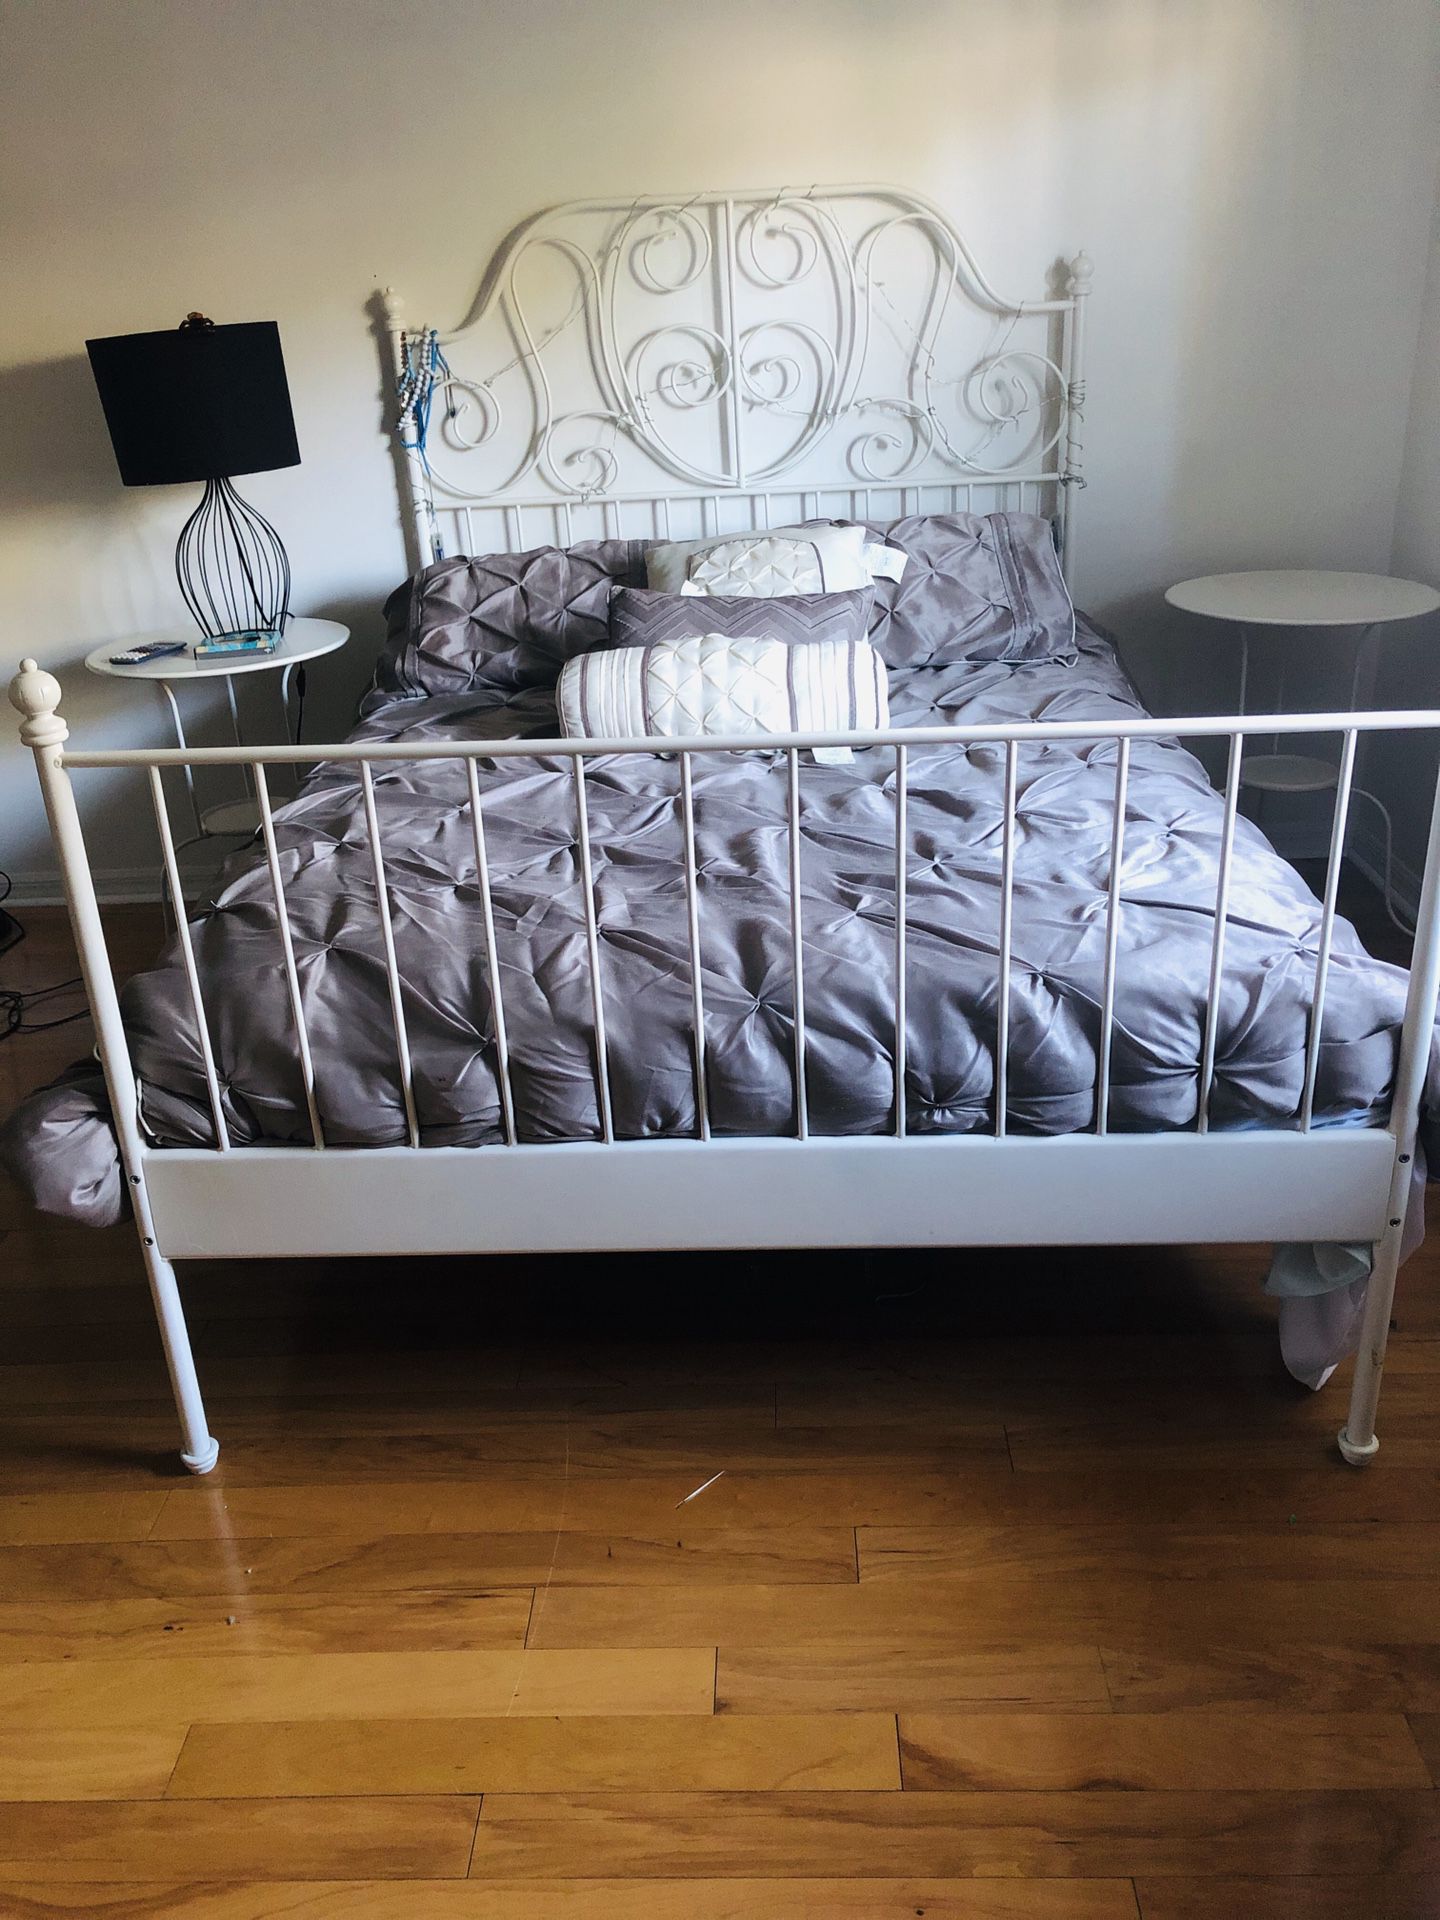 Ikea Leirvik Bed Frame For In, Ikea Silver Bed Frame